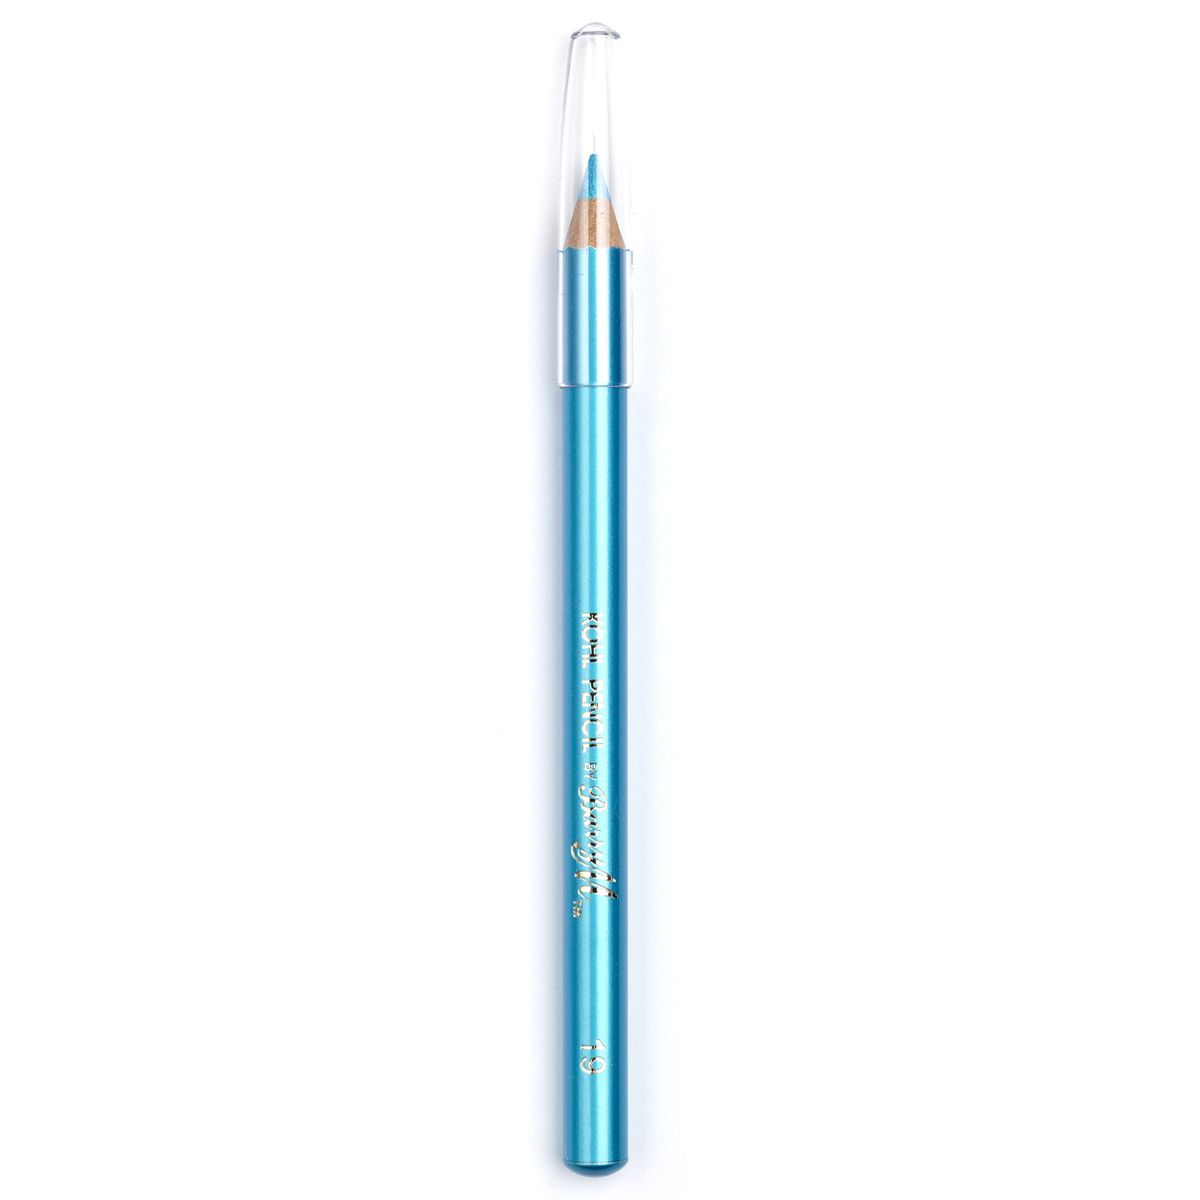 Crayon Eye-Liner - Kohl Stift